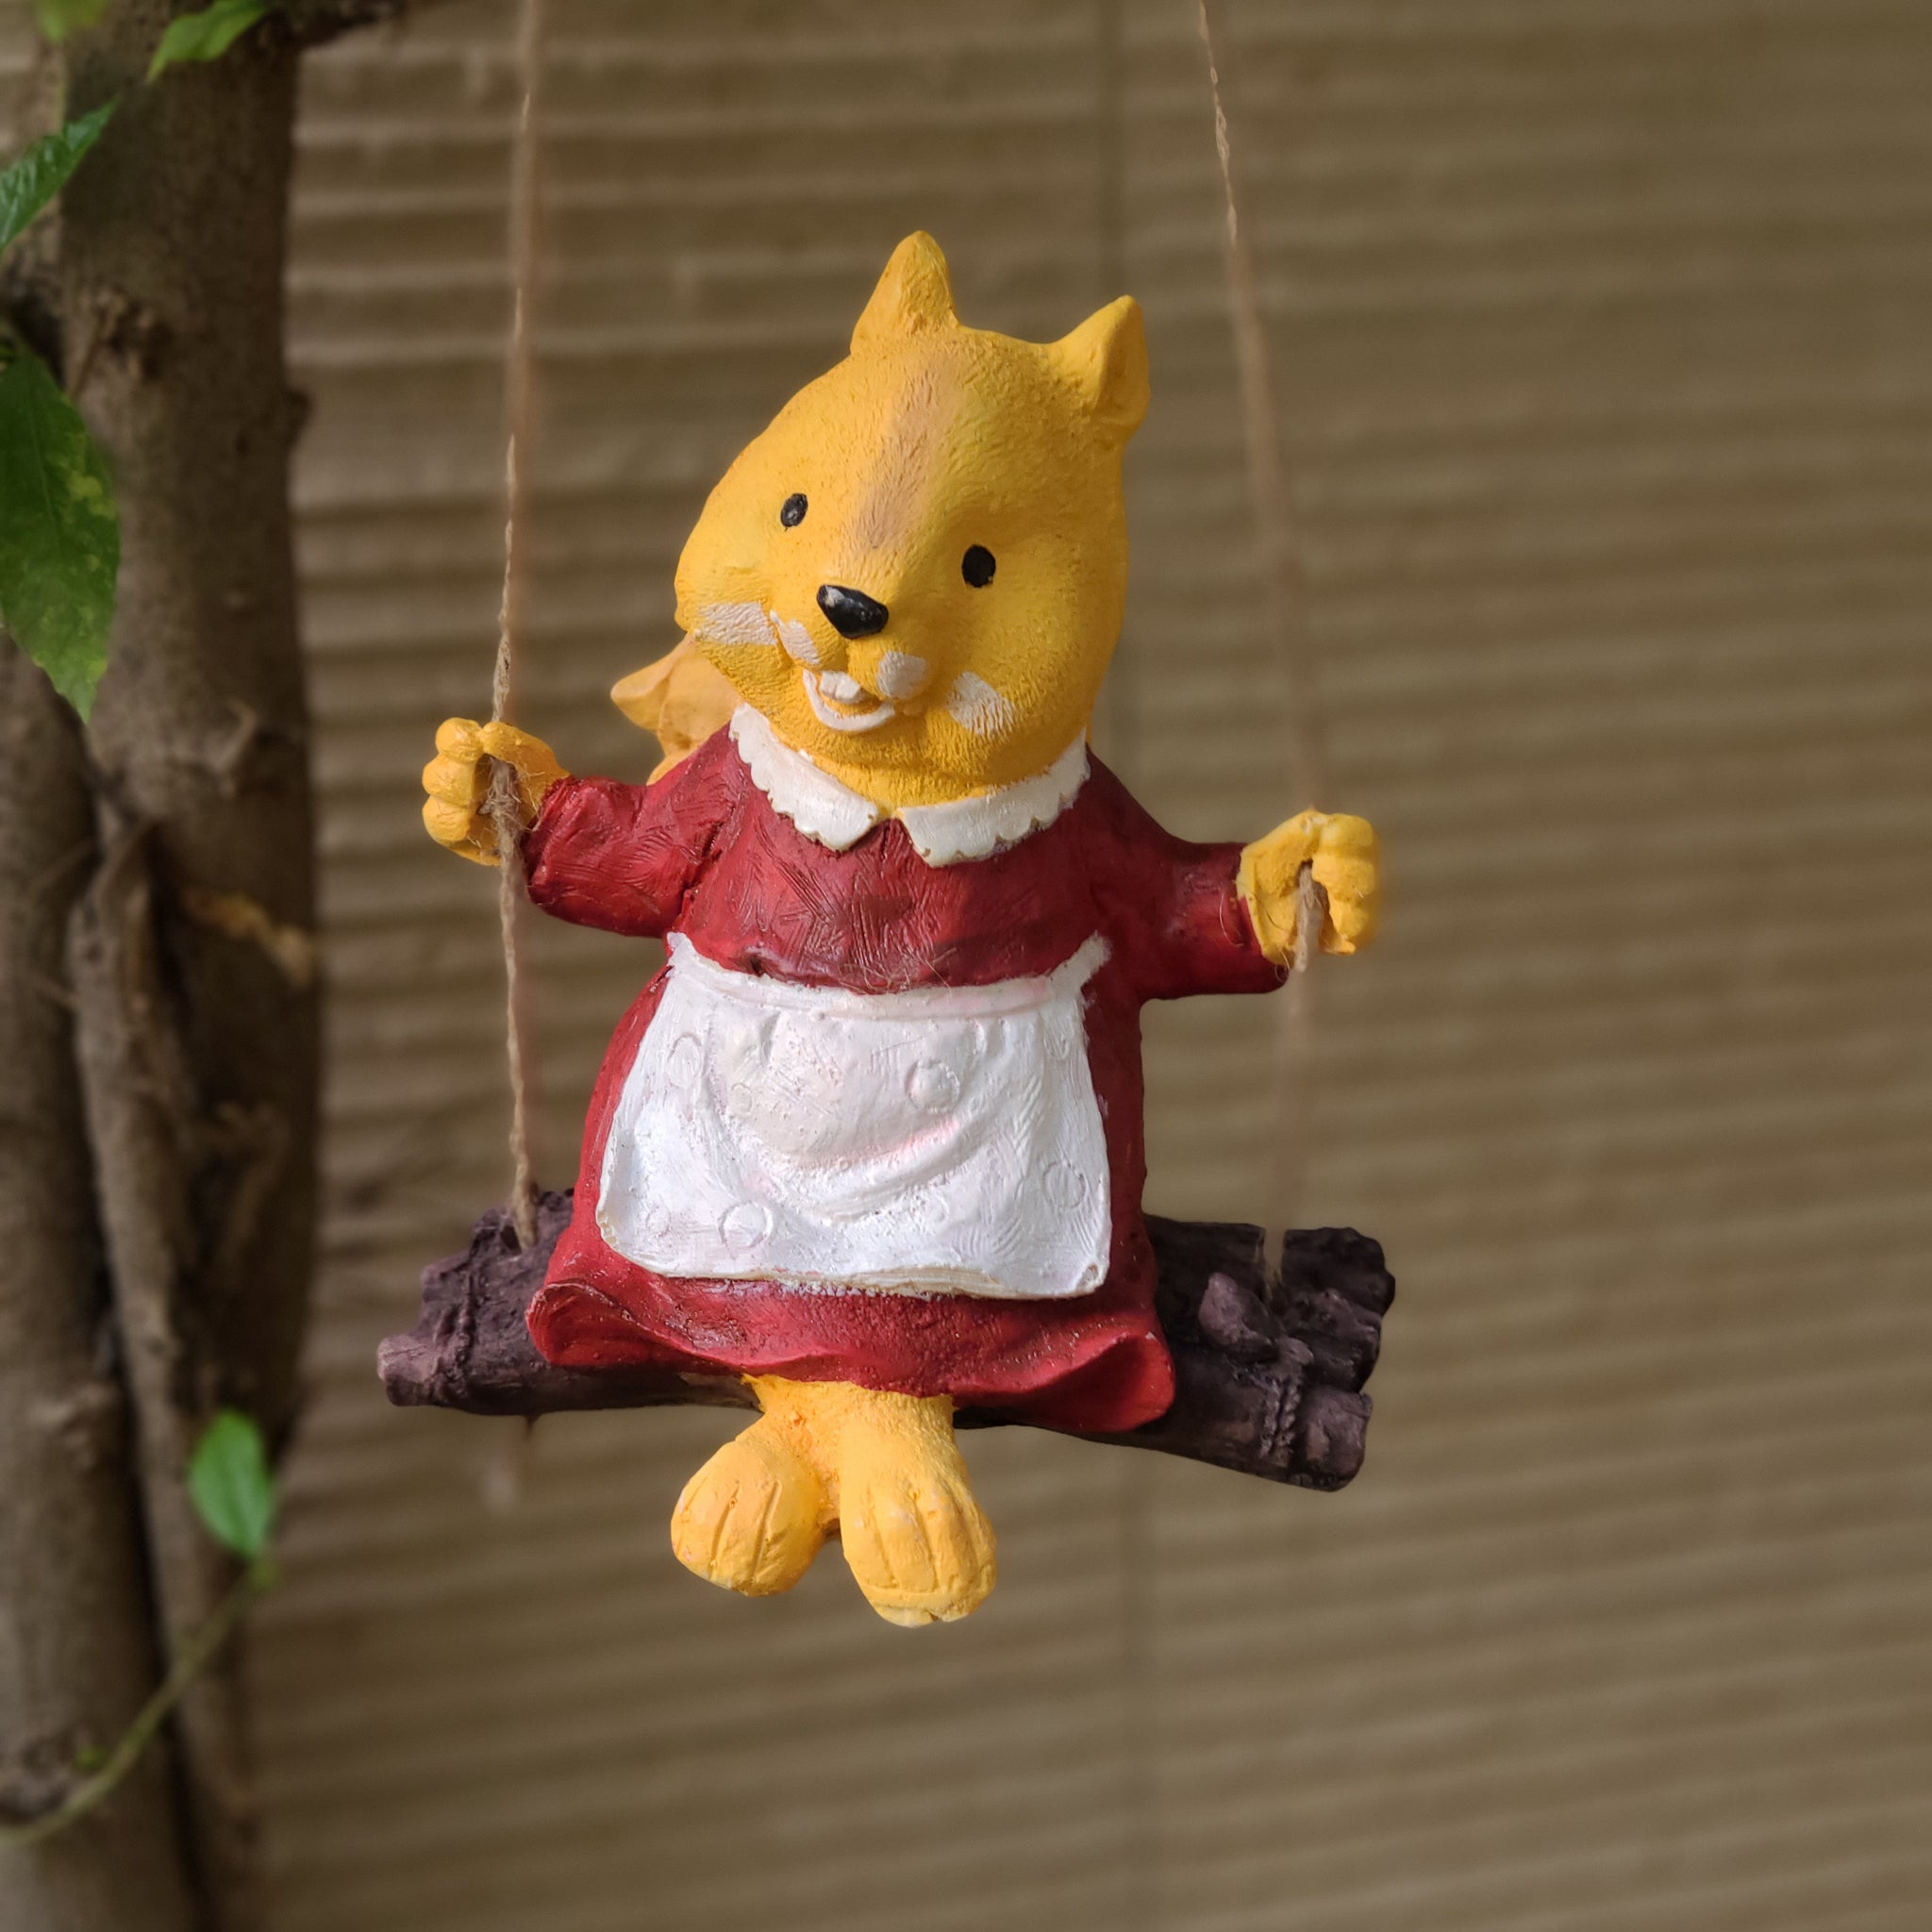 Buy Hanging Squirrel Statue Online Best Price